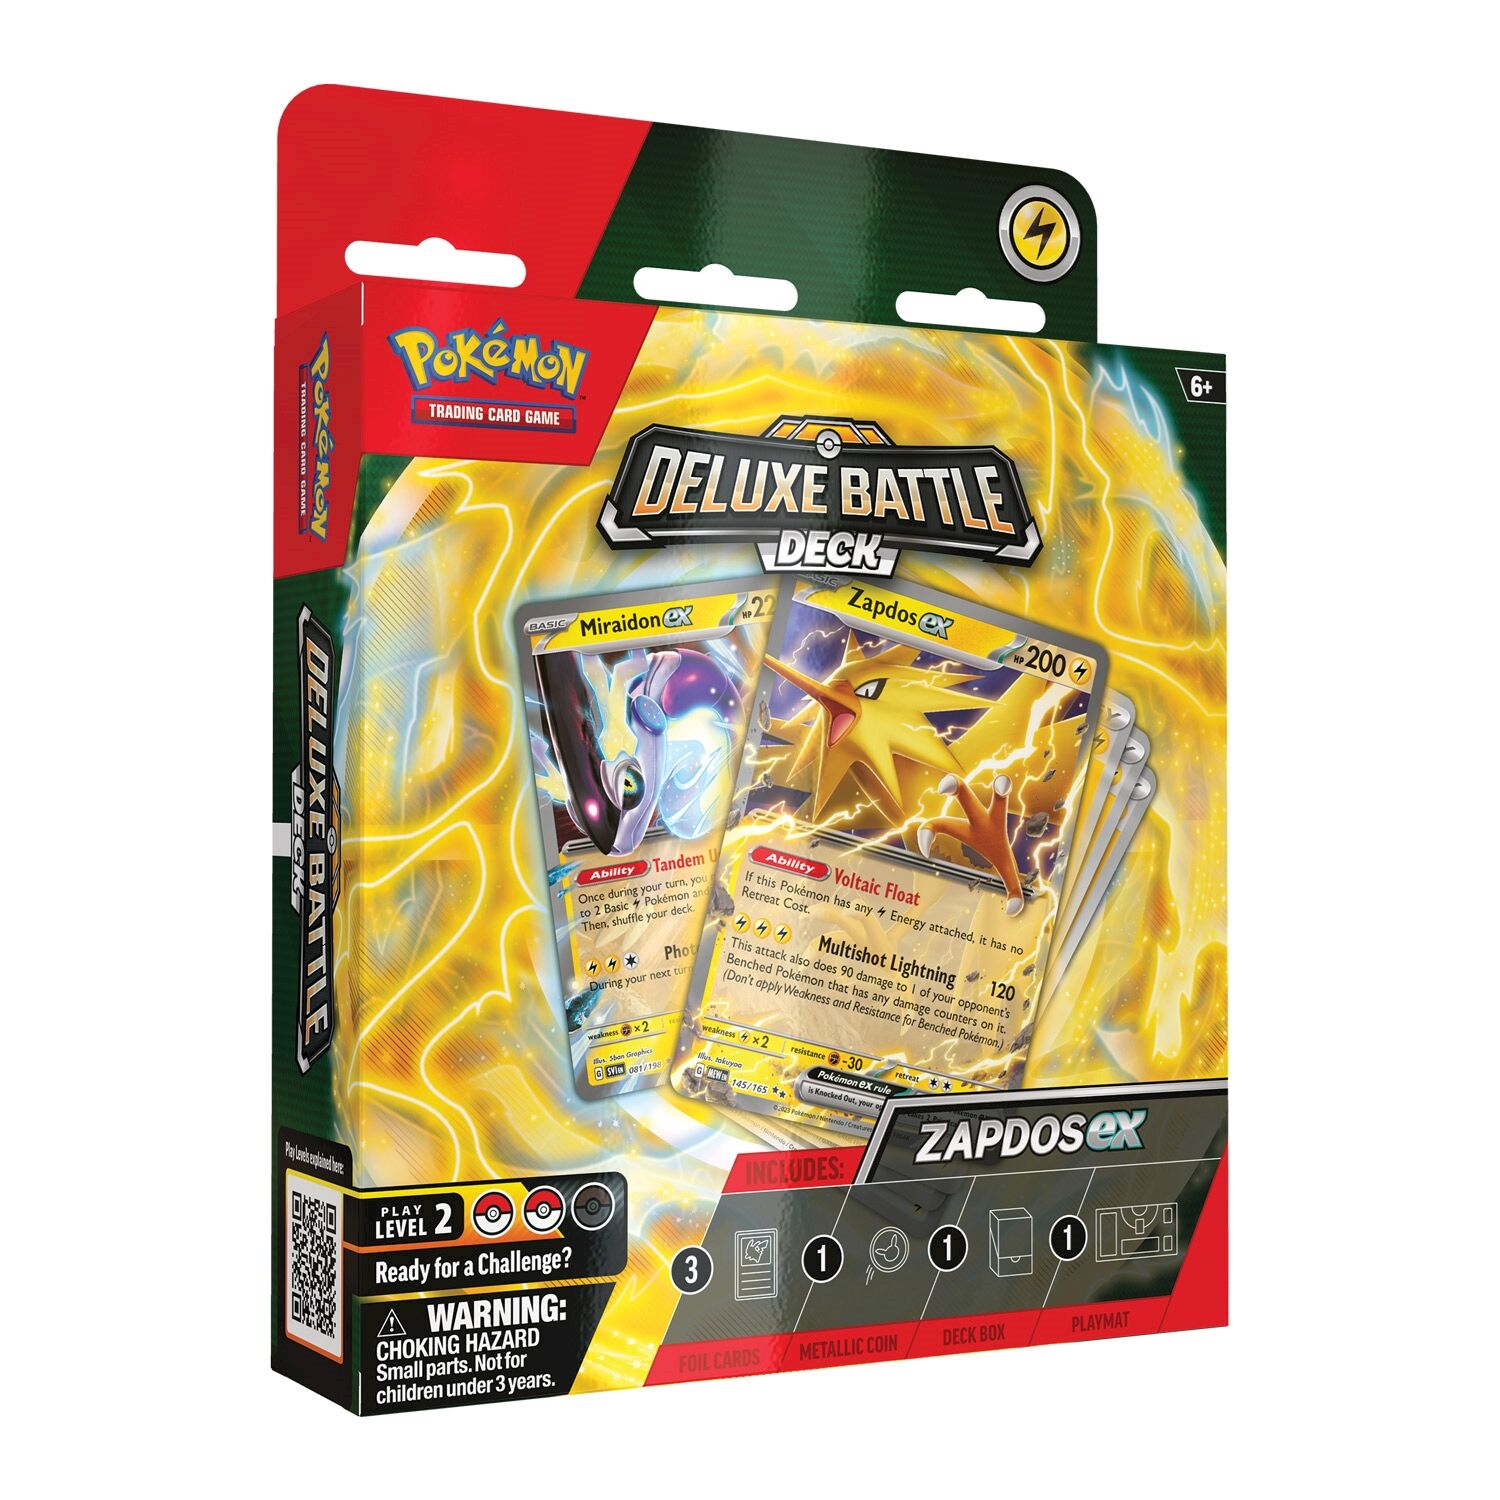 Pokémon Zapdos EX Battle Deck